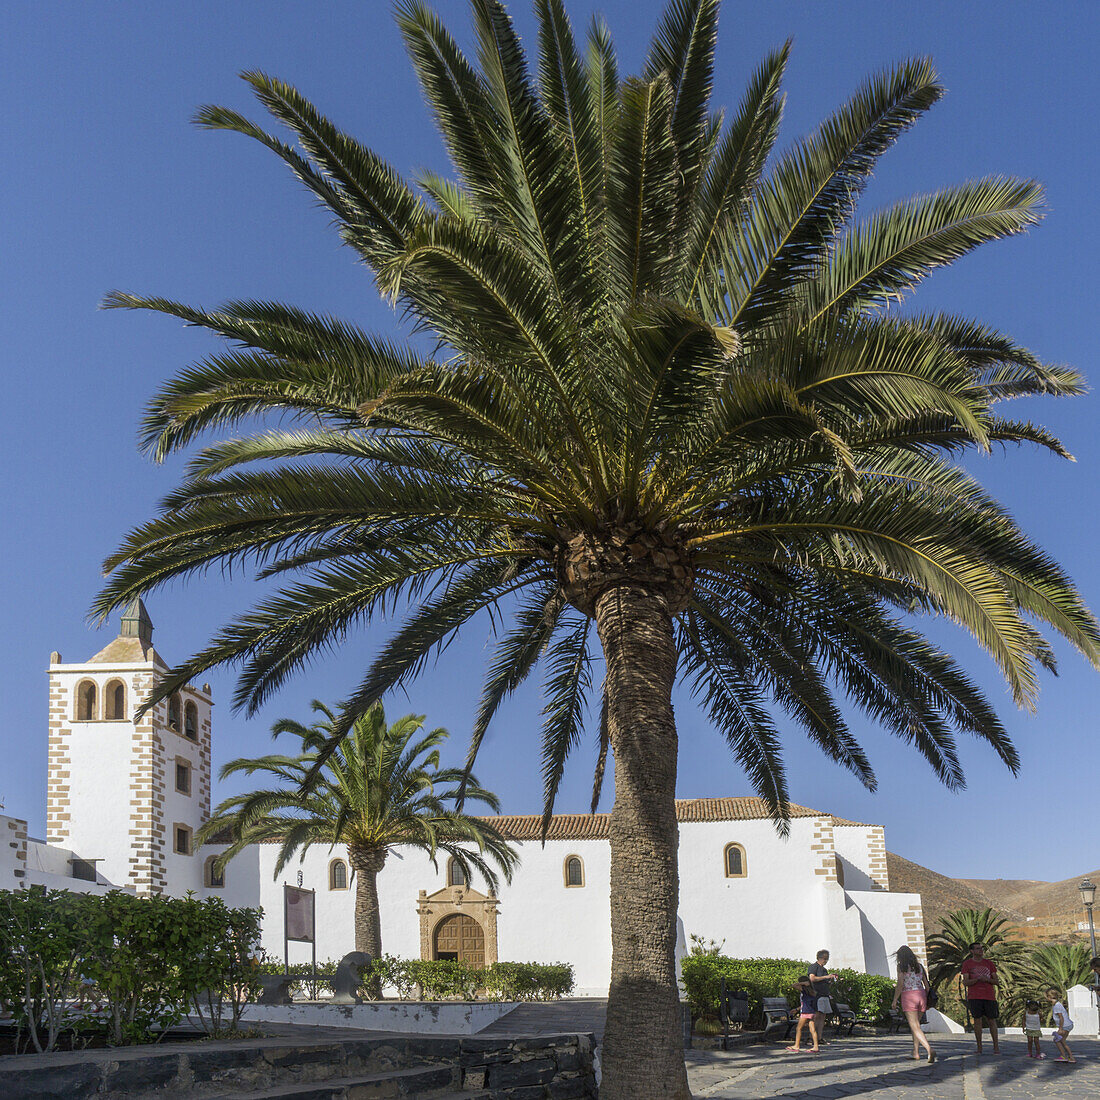 Kirche Santa Maria, Betancuria, Fuerteventura, Kanarische Inseln, Spanien